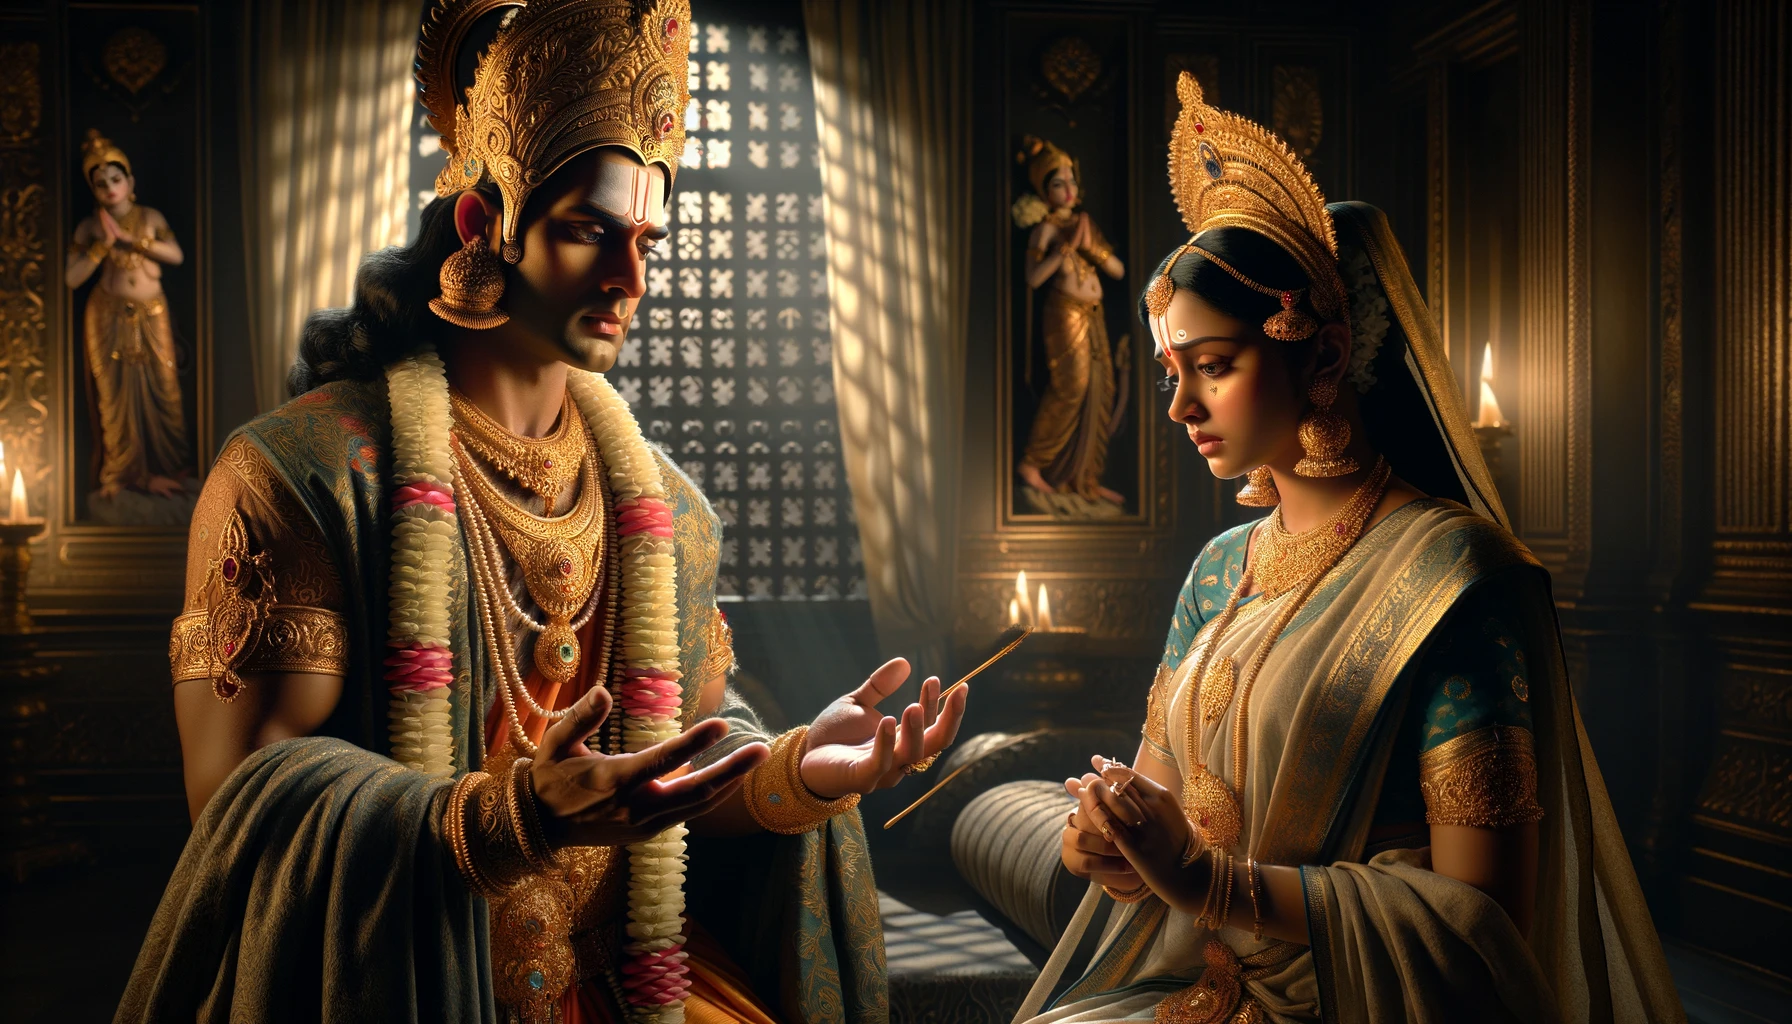 Rama Informs Sita of His Exile